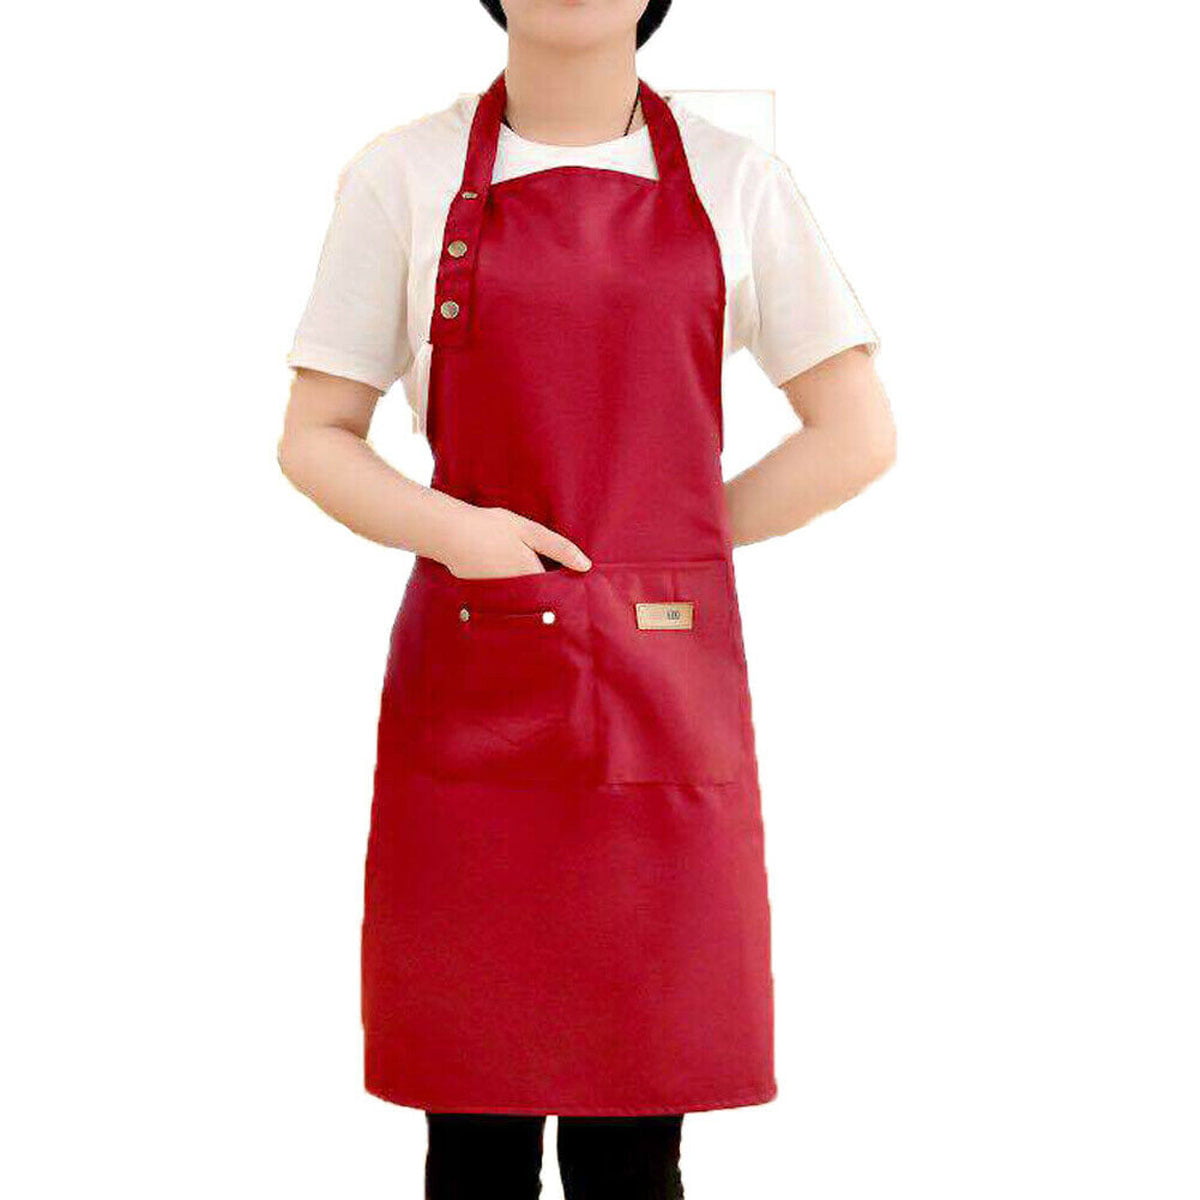 Details about   Men Women Adjustable Bib Apron Cooking Kitchen Restaurant Chef Dress with Pocket 